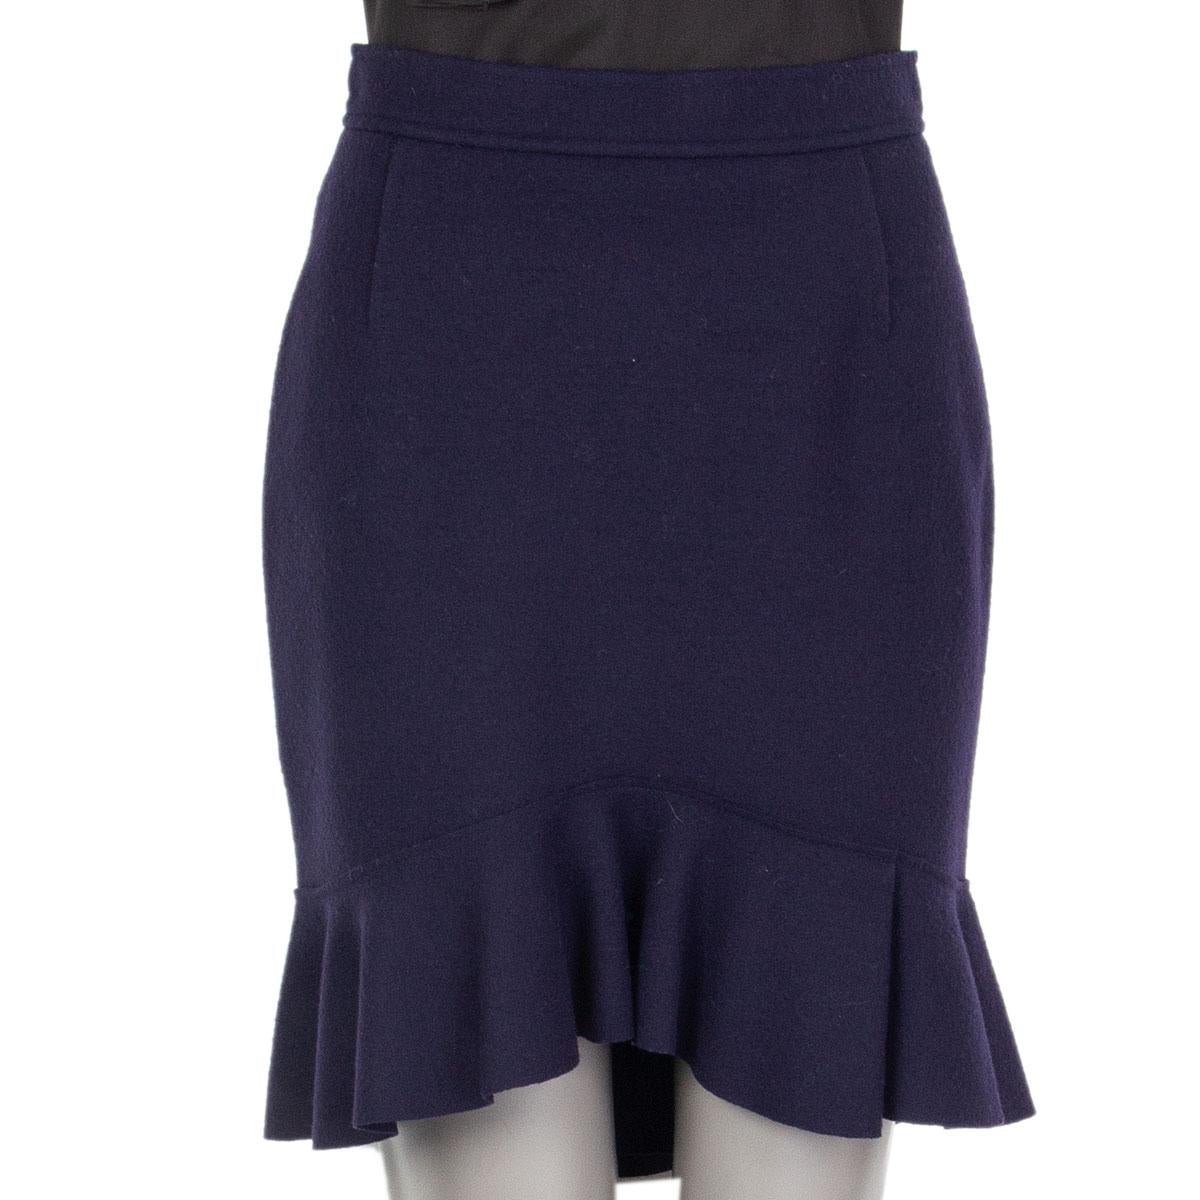 purple wool skirt